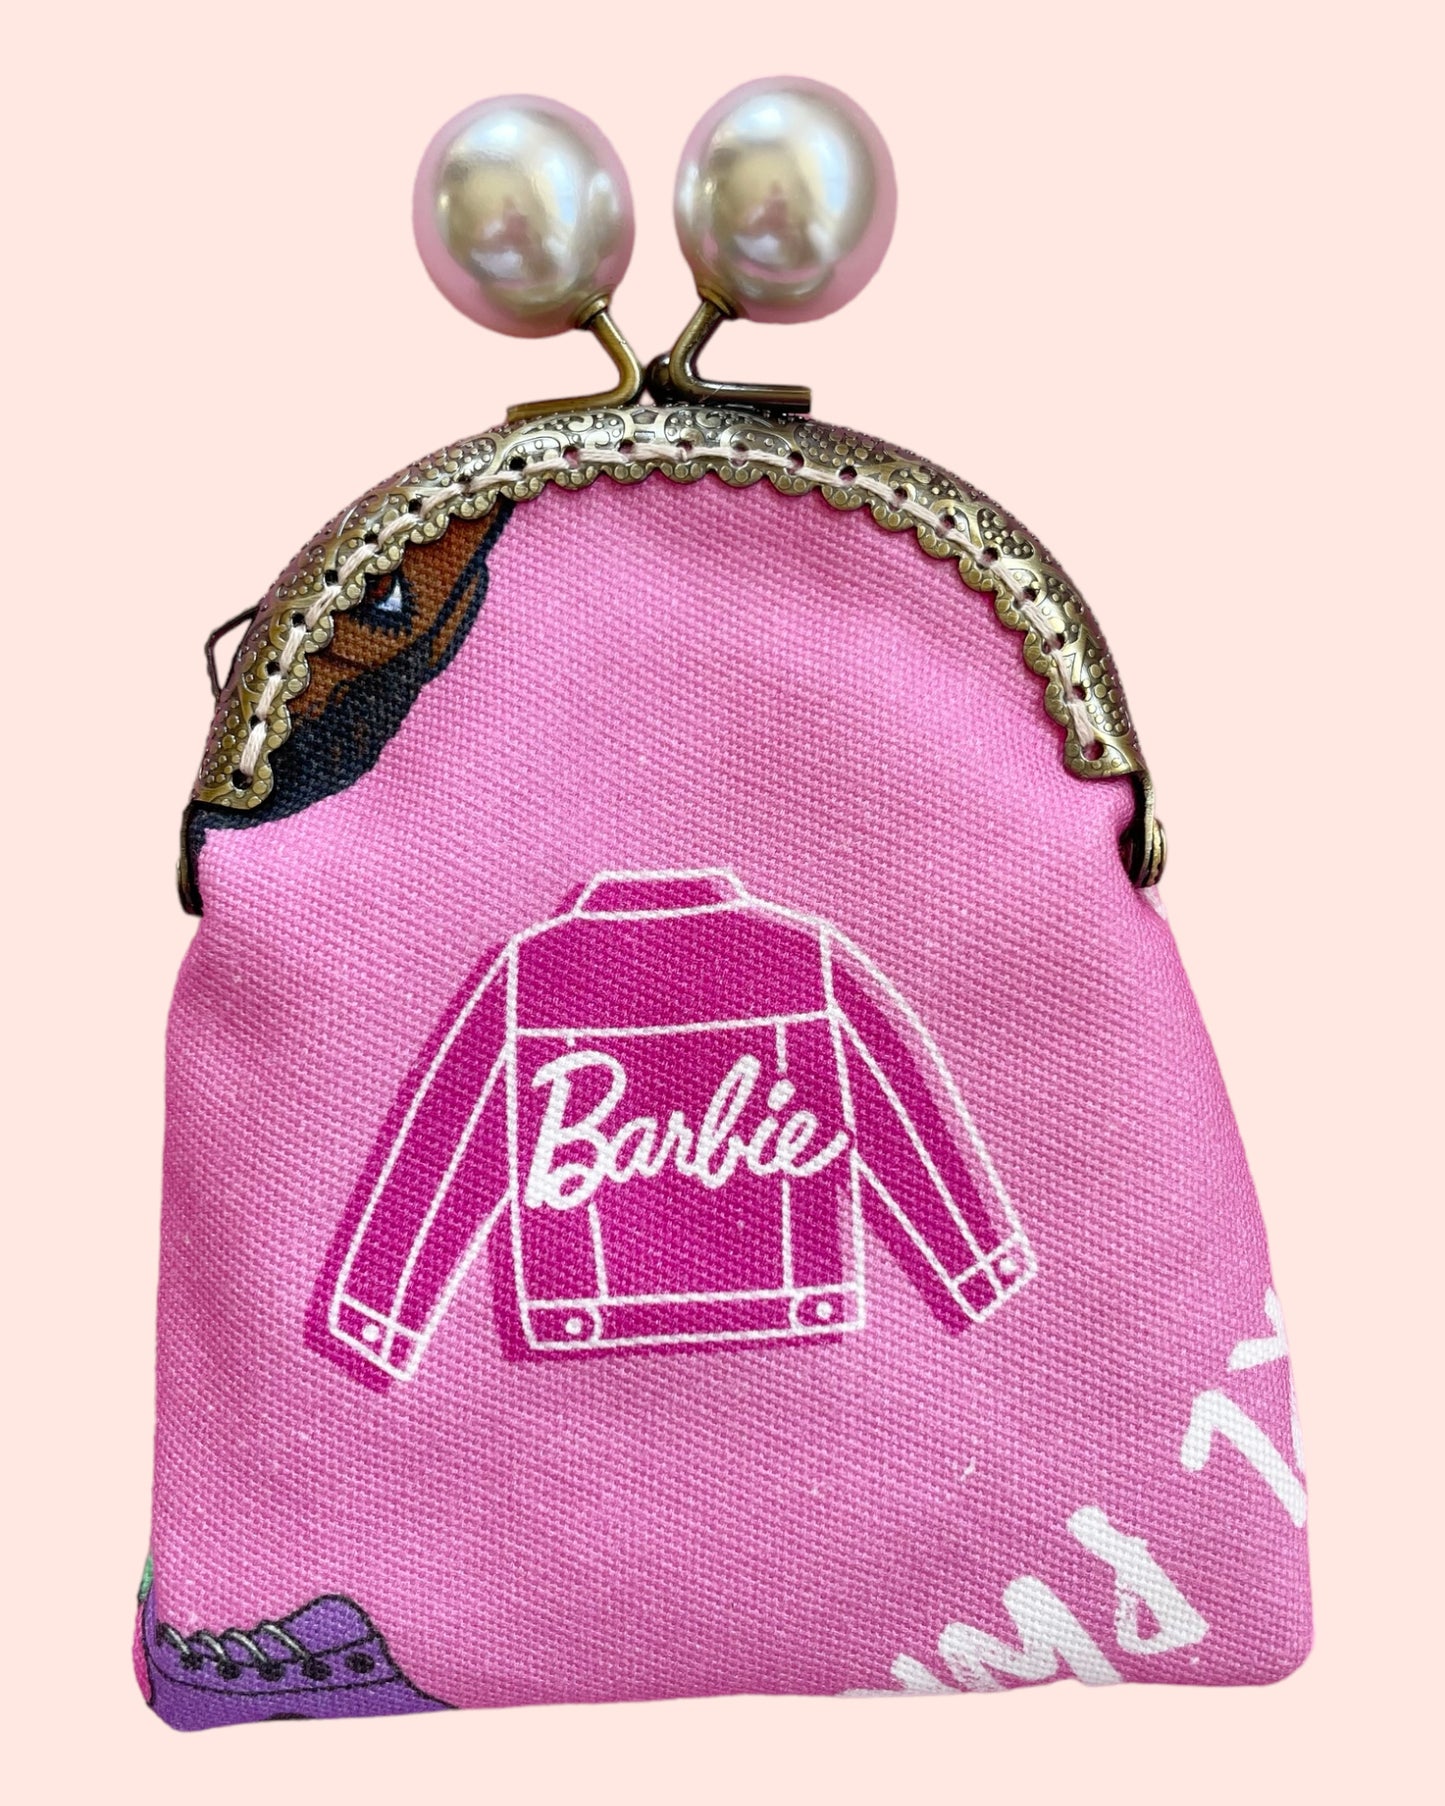 Barbie Jacket Purse Gift Box